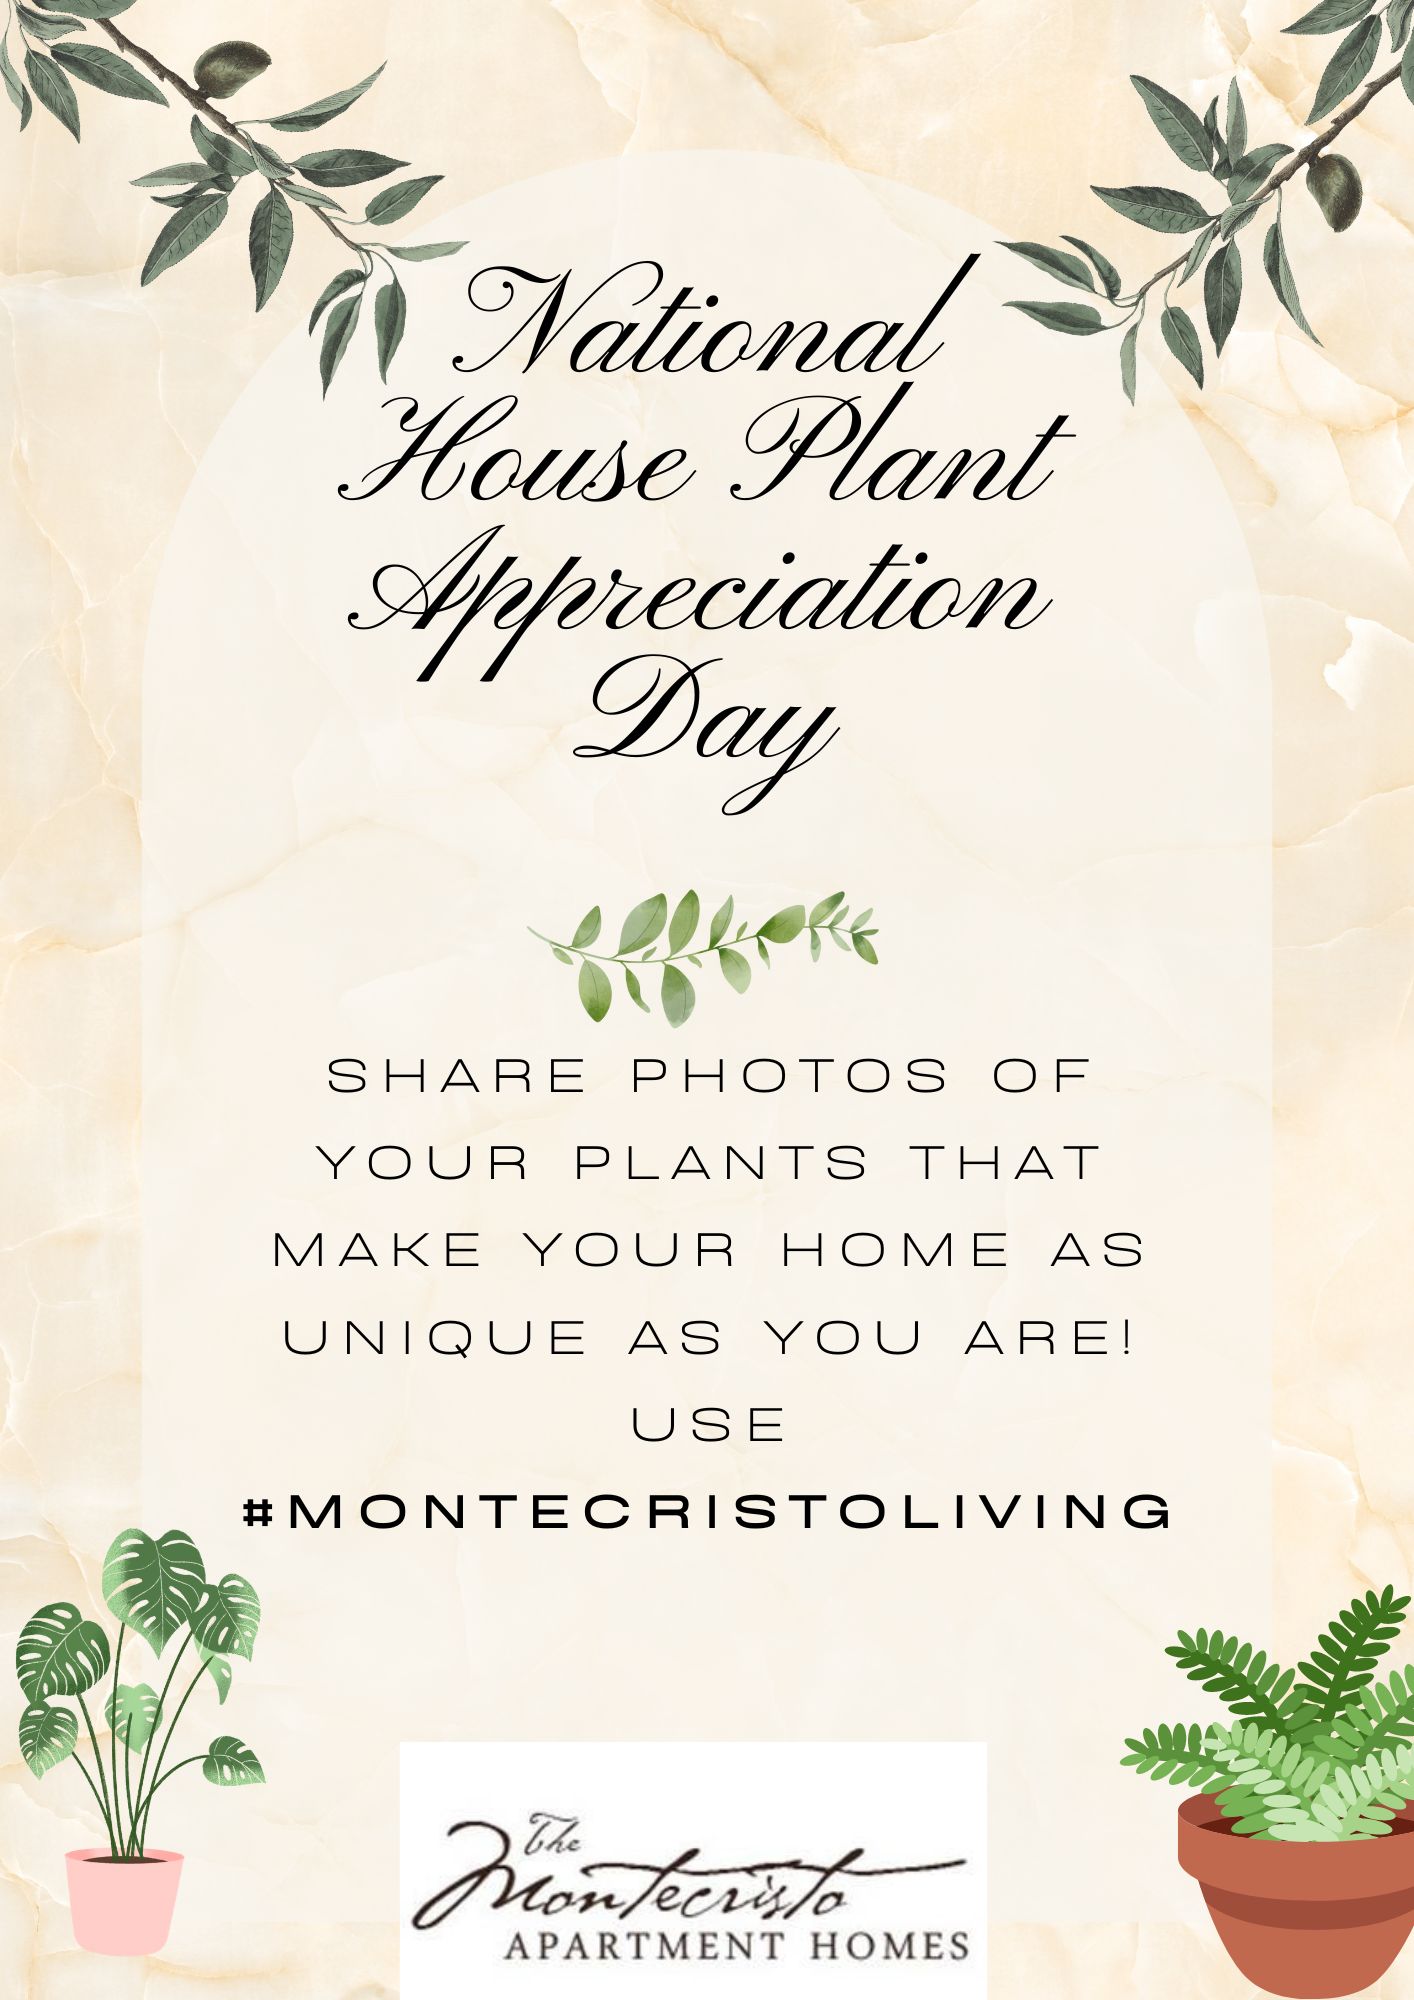 Celebrate National House Plant Appreciation Day in the luxurious Montecristo Apartments located in the prestigious Stone Oak neighborhood of San Antonio.